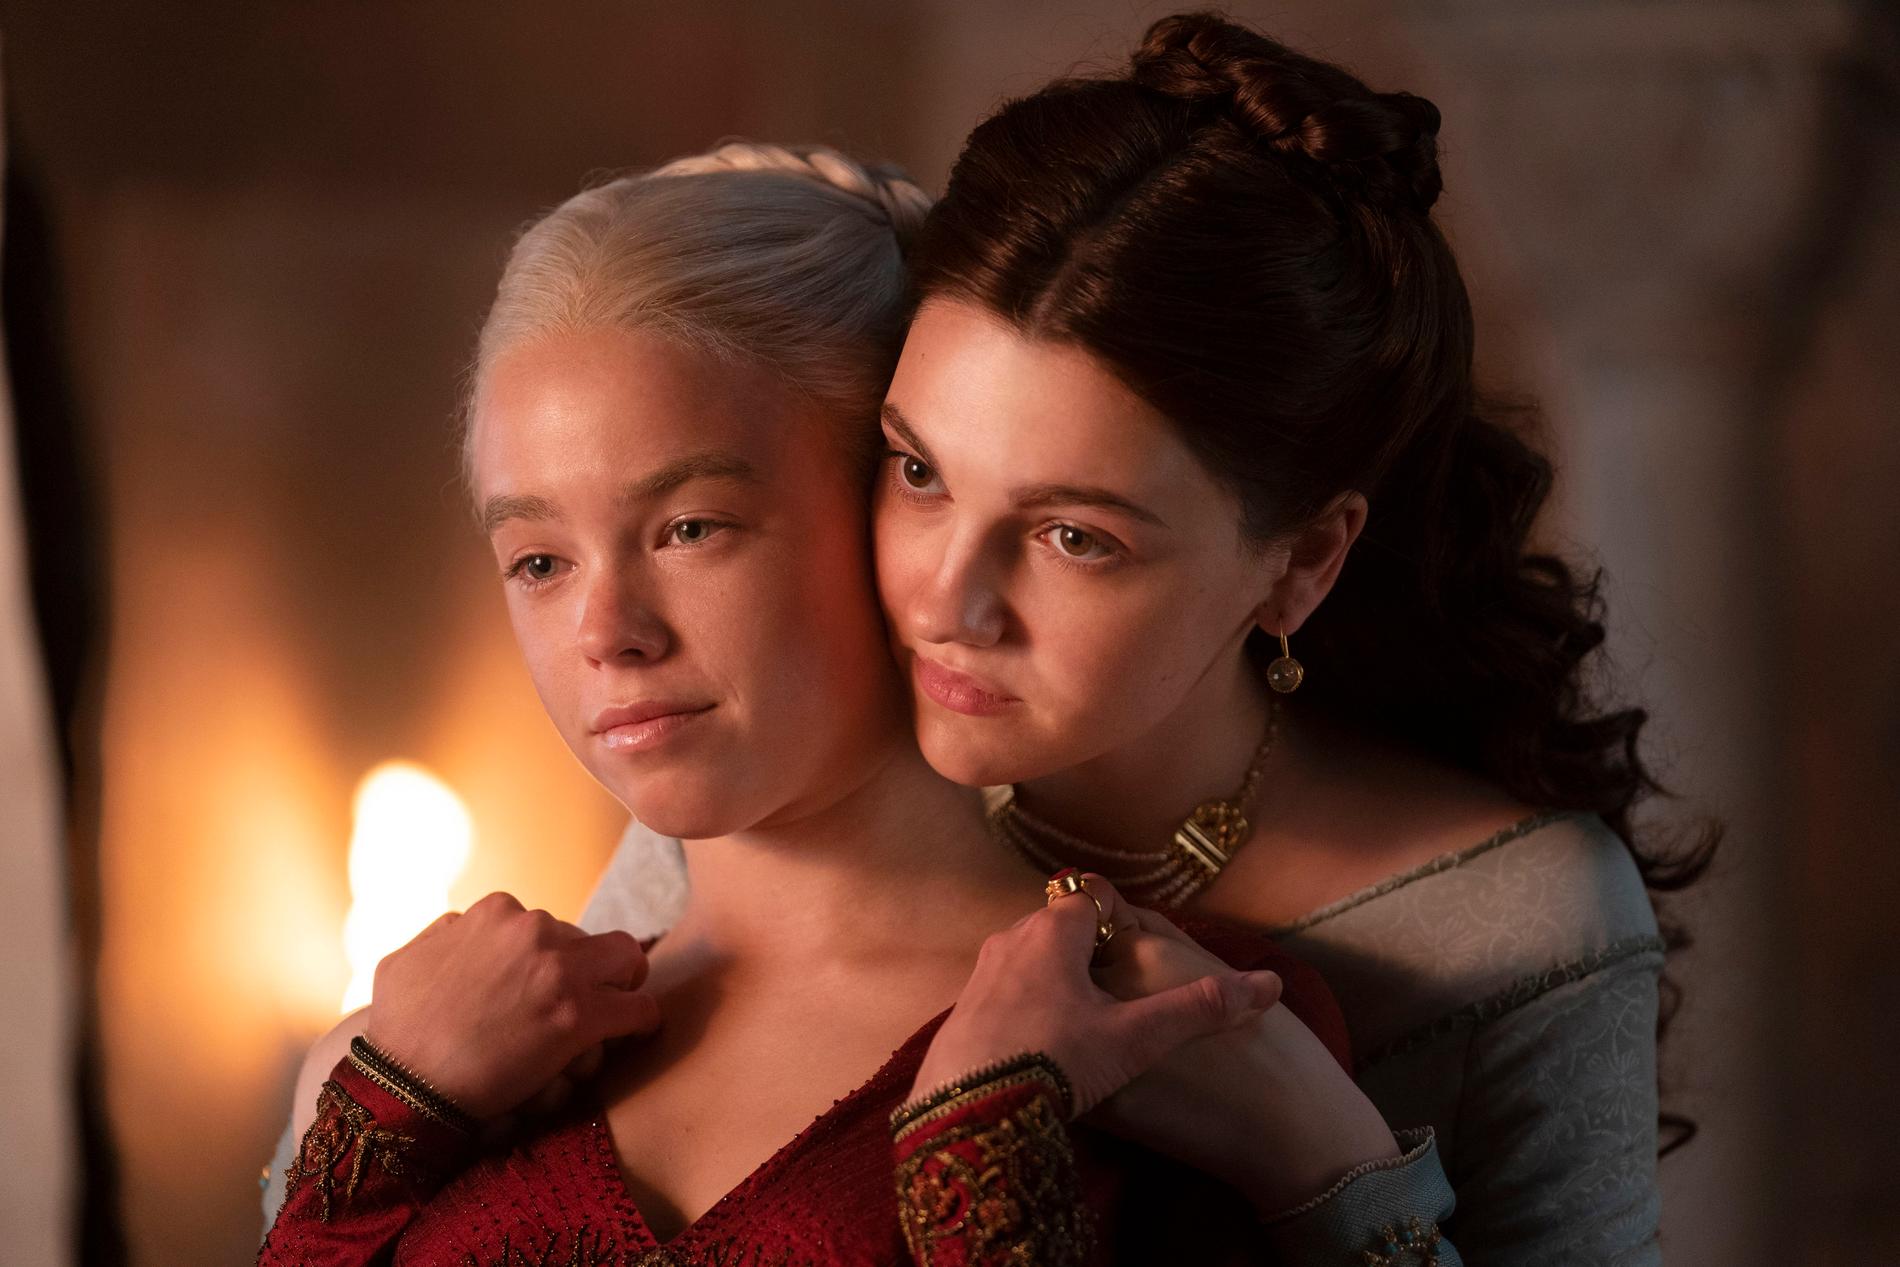 Milly Alcock som unga prinsessan Rhaenyra Targaryen och Emily Carey som unga Alicent Hightower. ”House of the dragon” har premiär den 22 augusti.